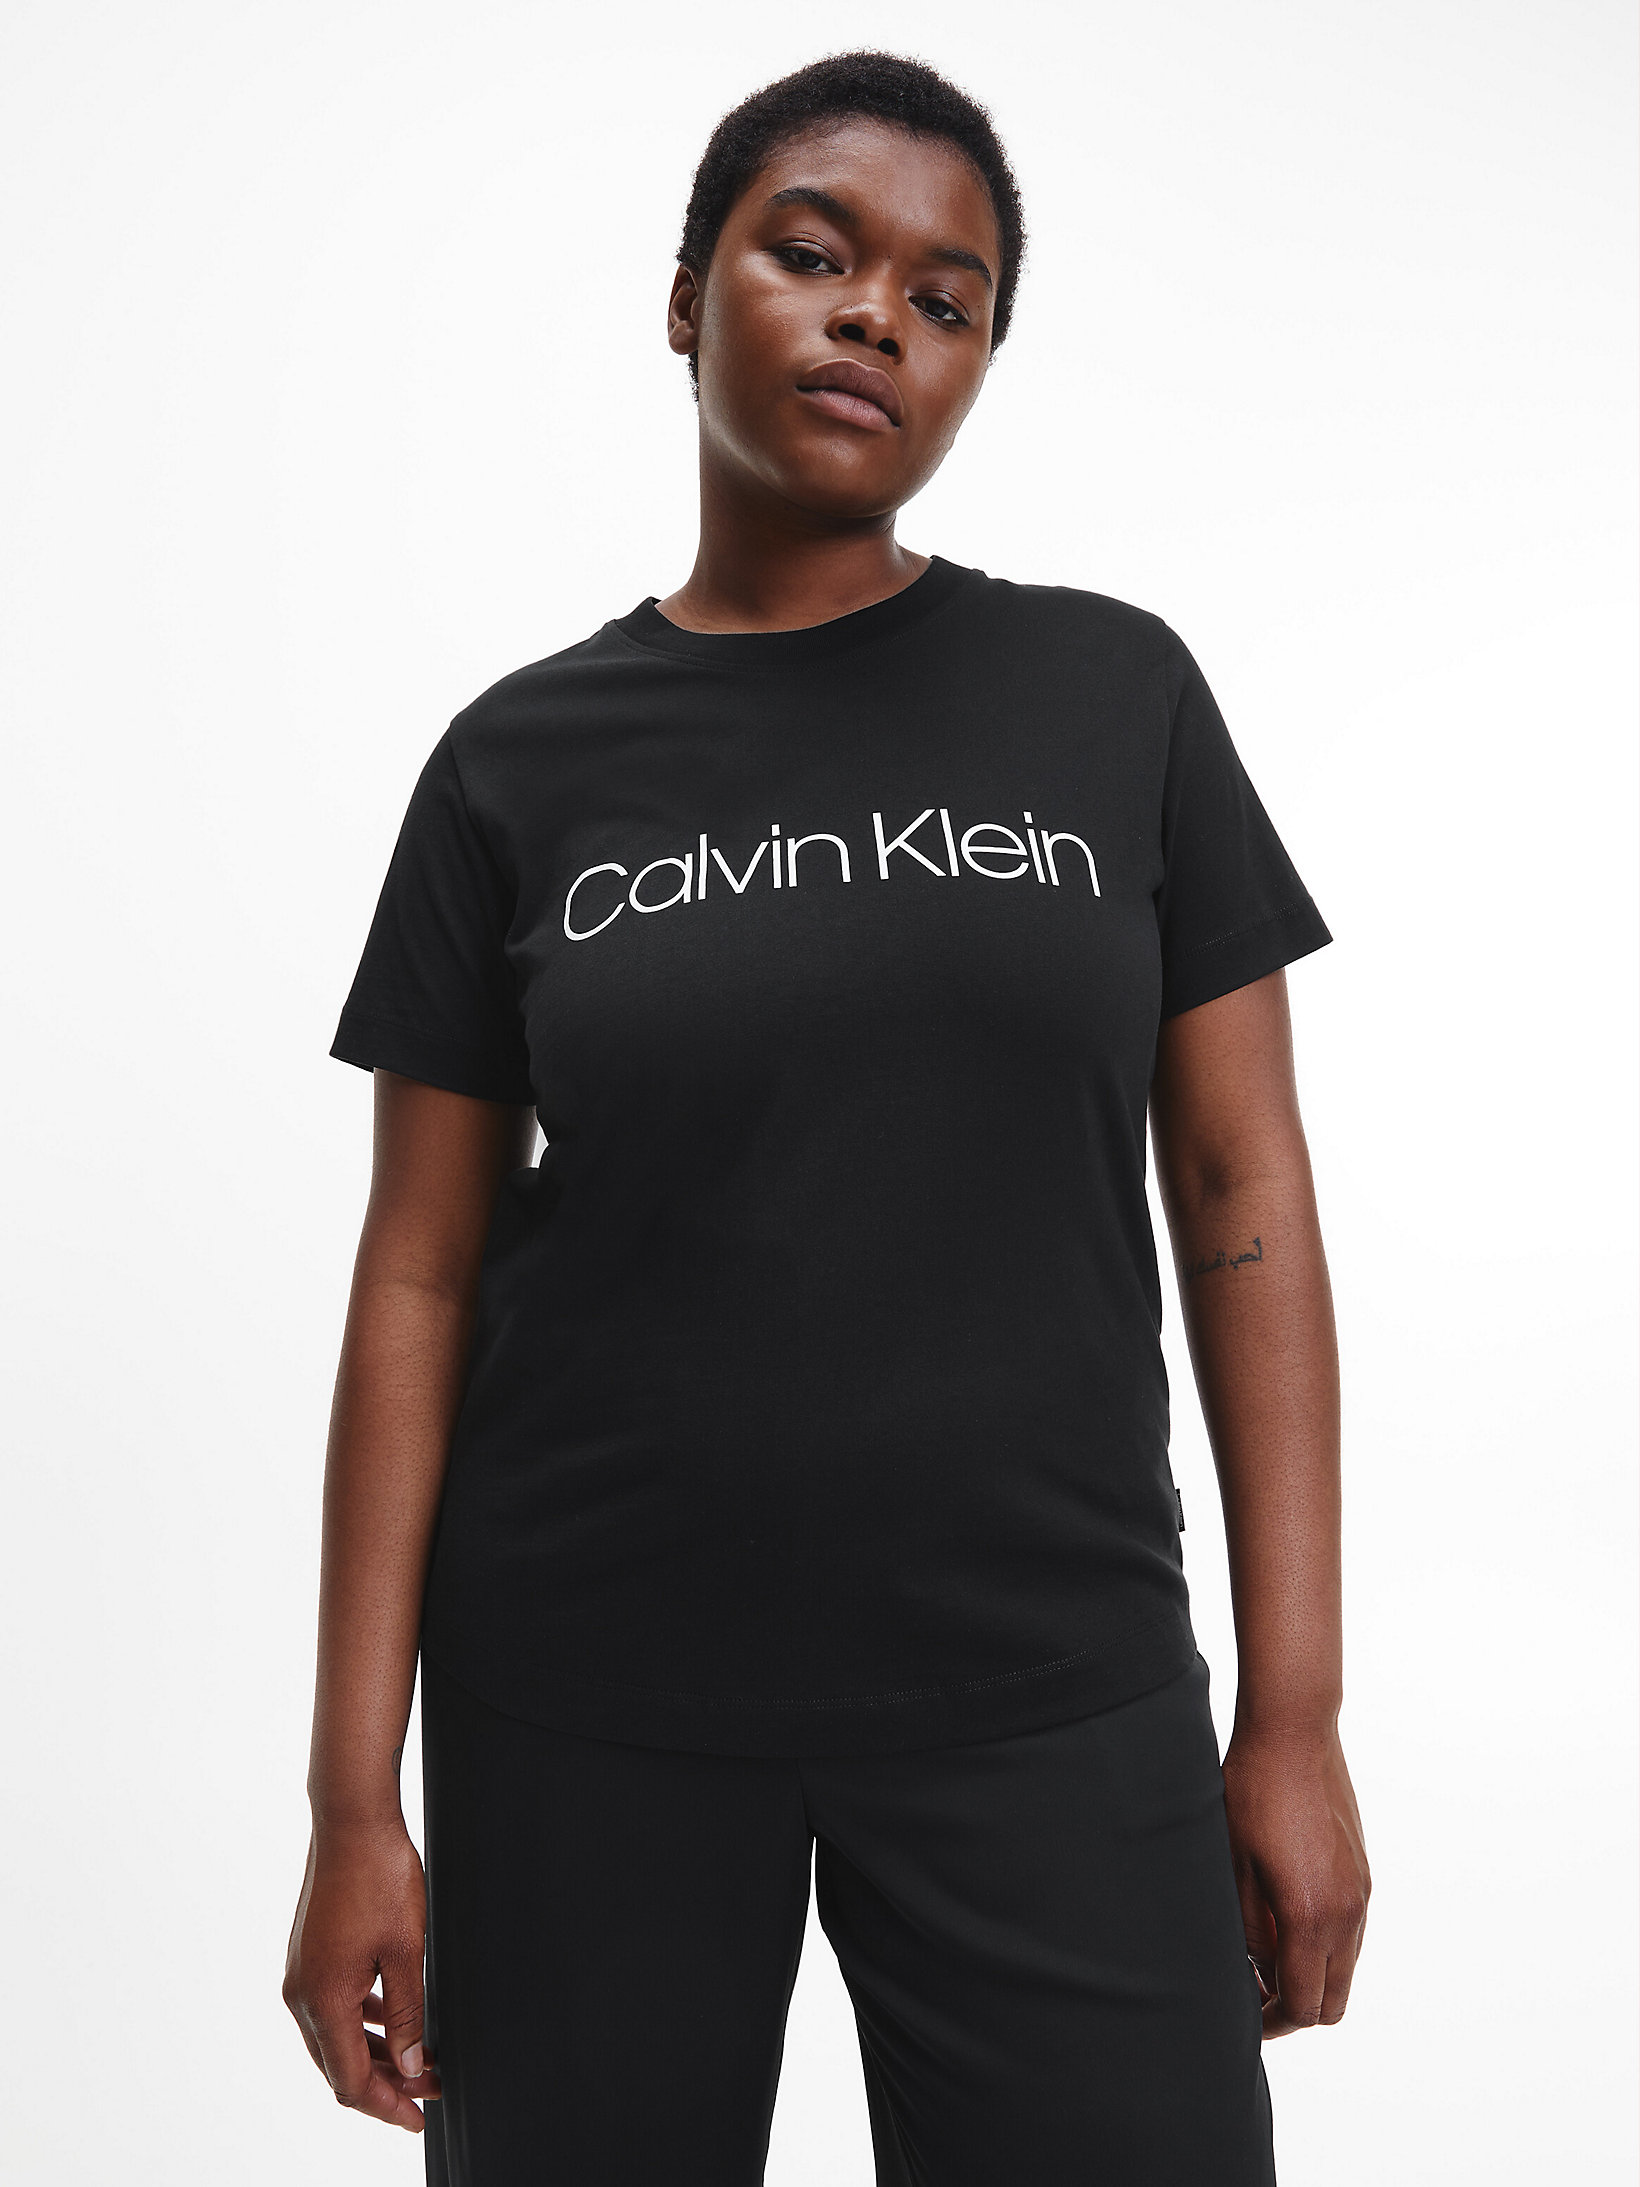 CK Black T-Shirt In Cotone Biologico Plus Size undefined donna Calvin Klein